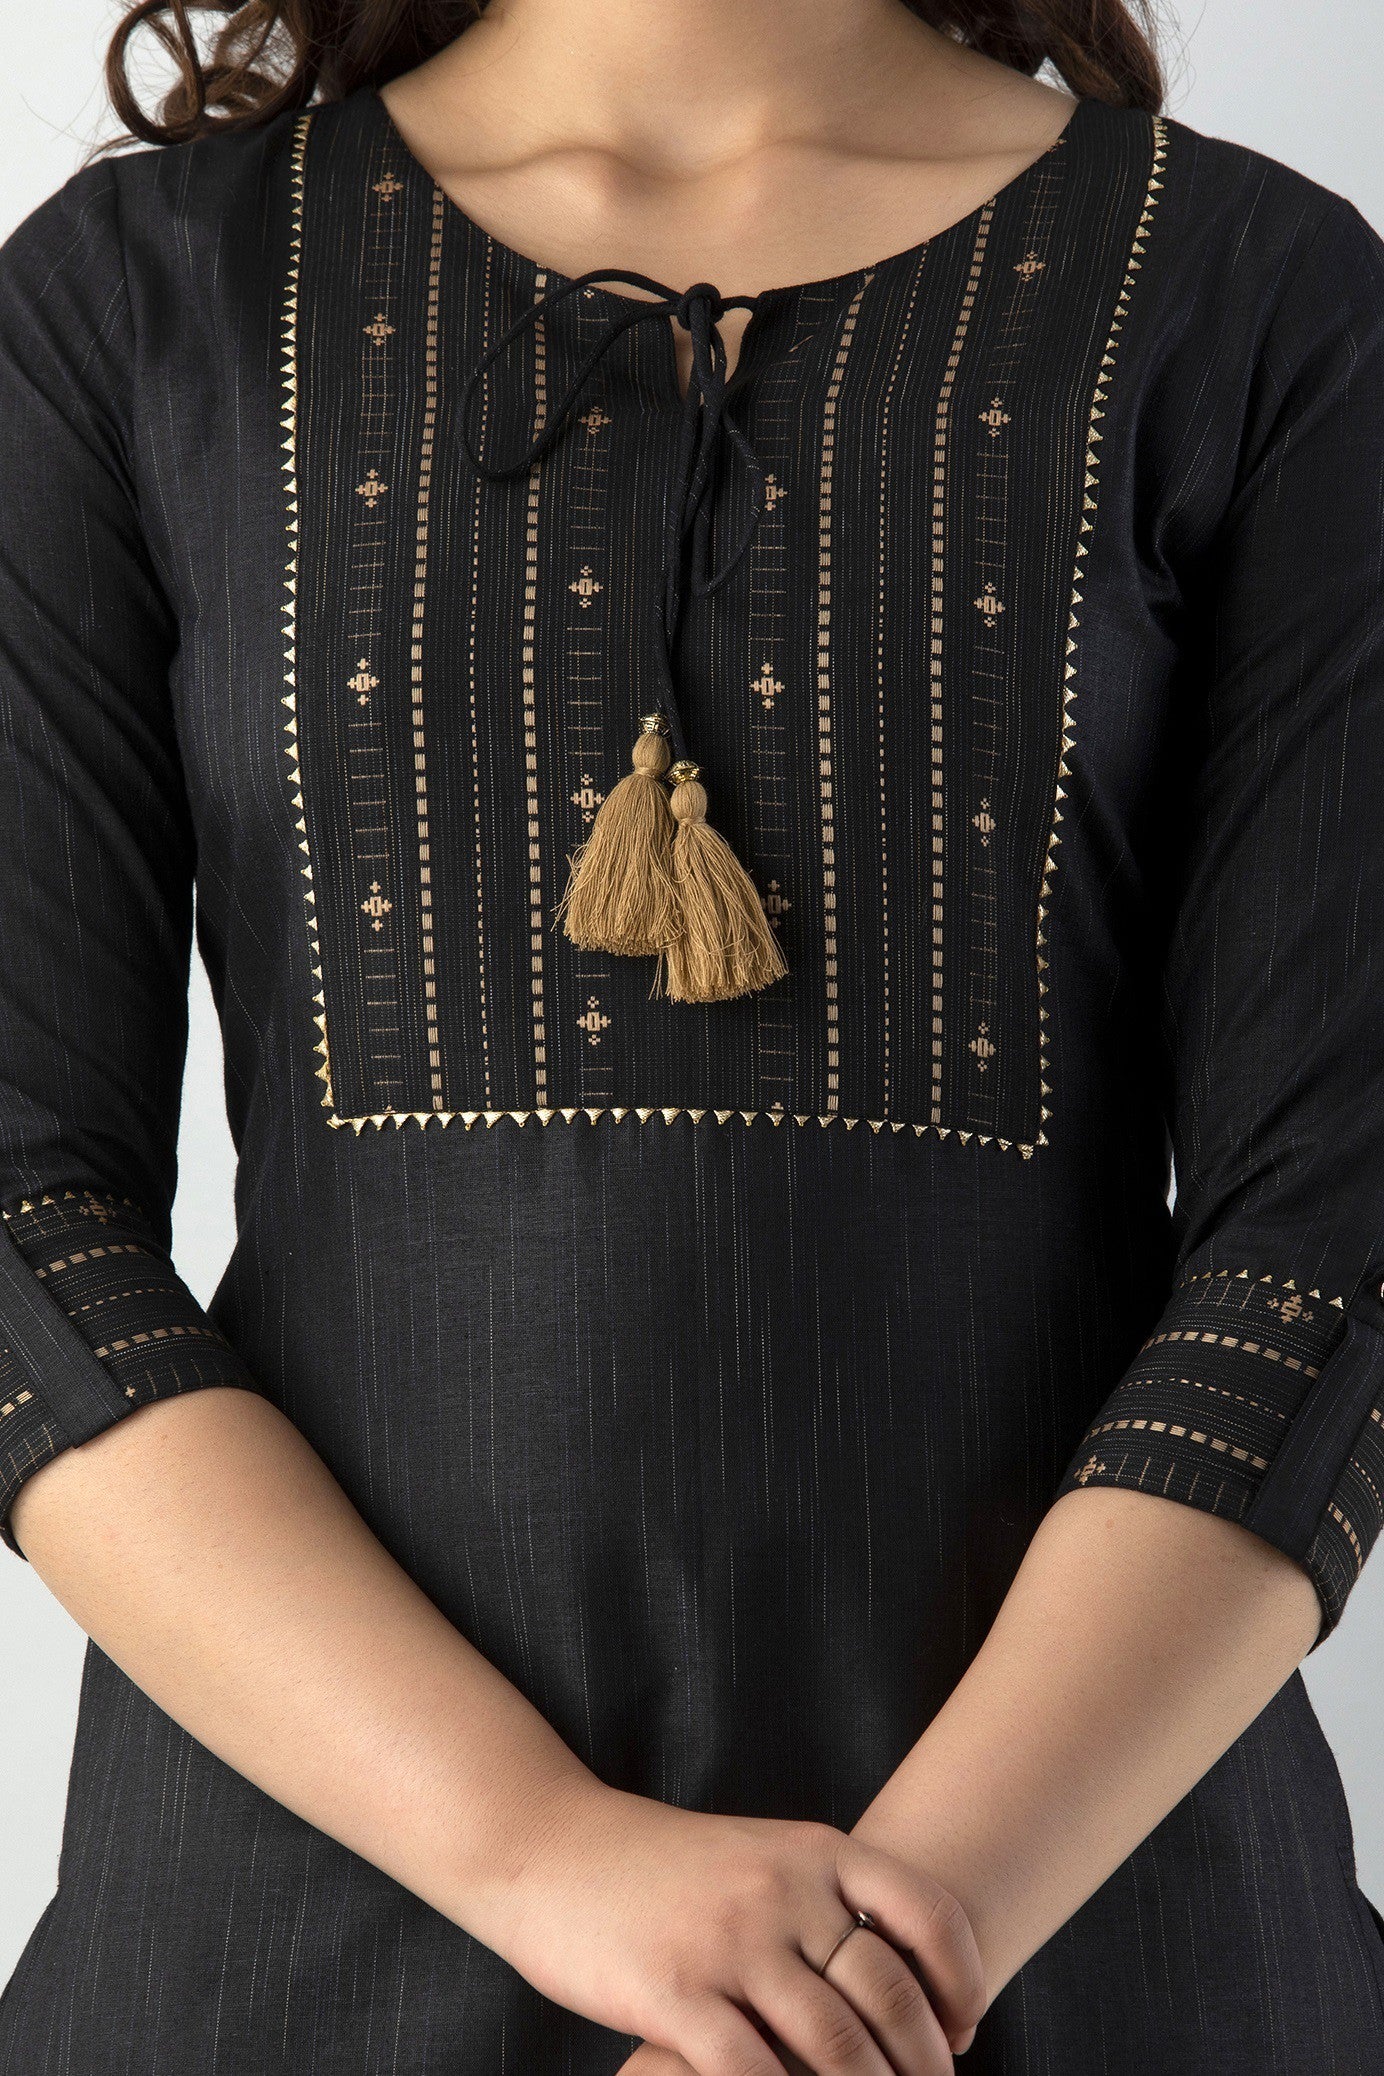 Women's Striped & Woven Cotton Blend Straight Kurta Pant & Dupatta Set (Black) - Charu